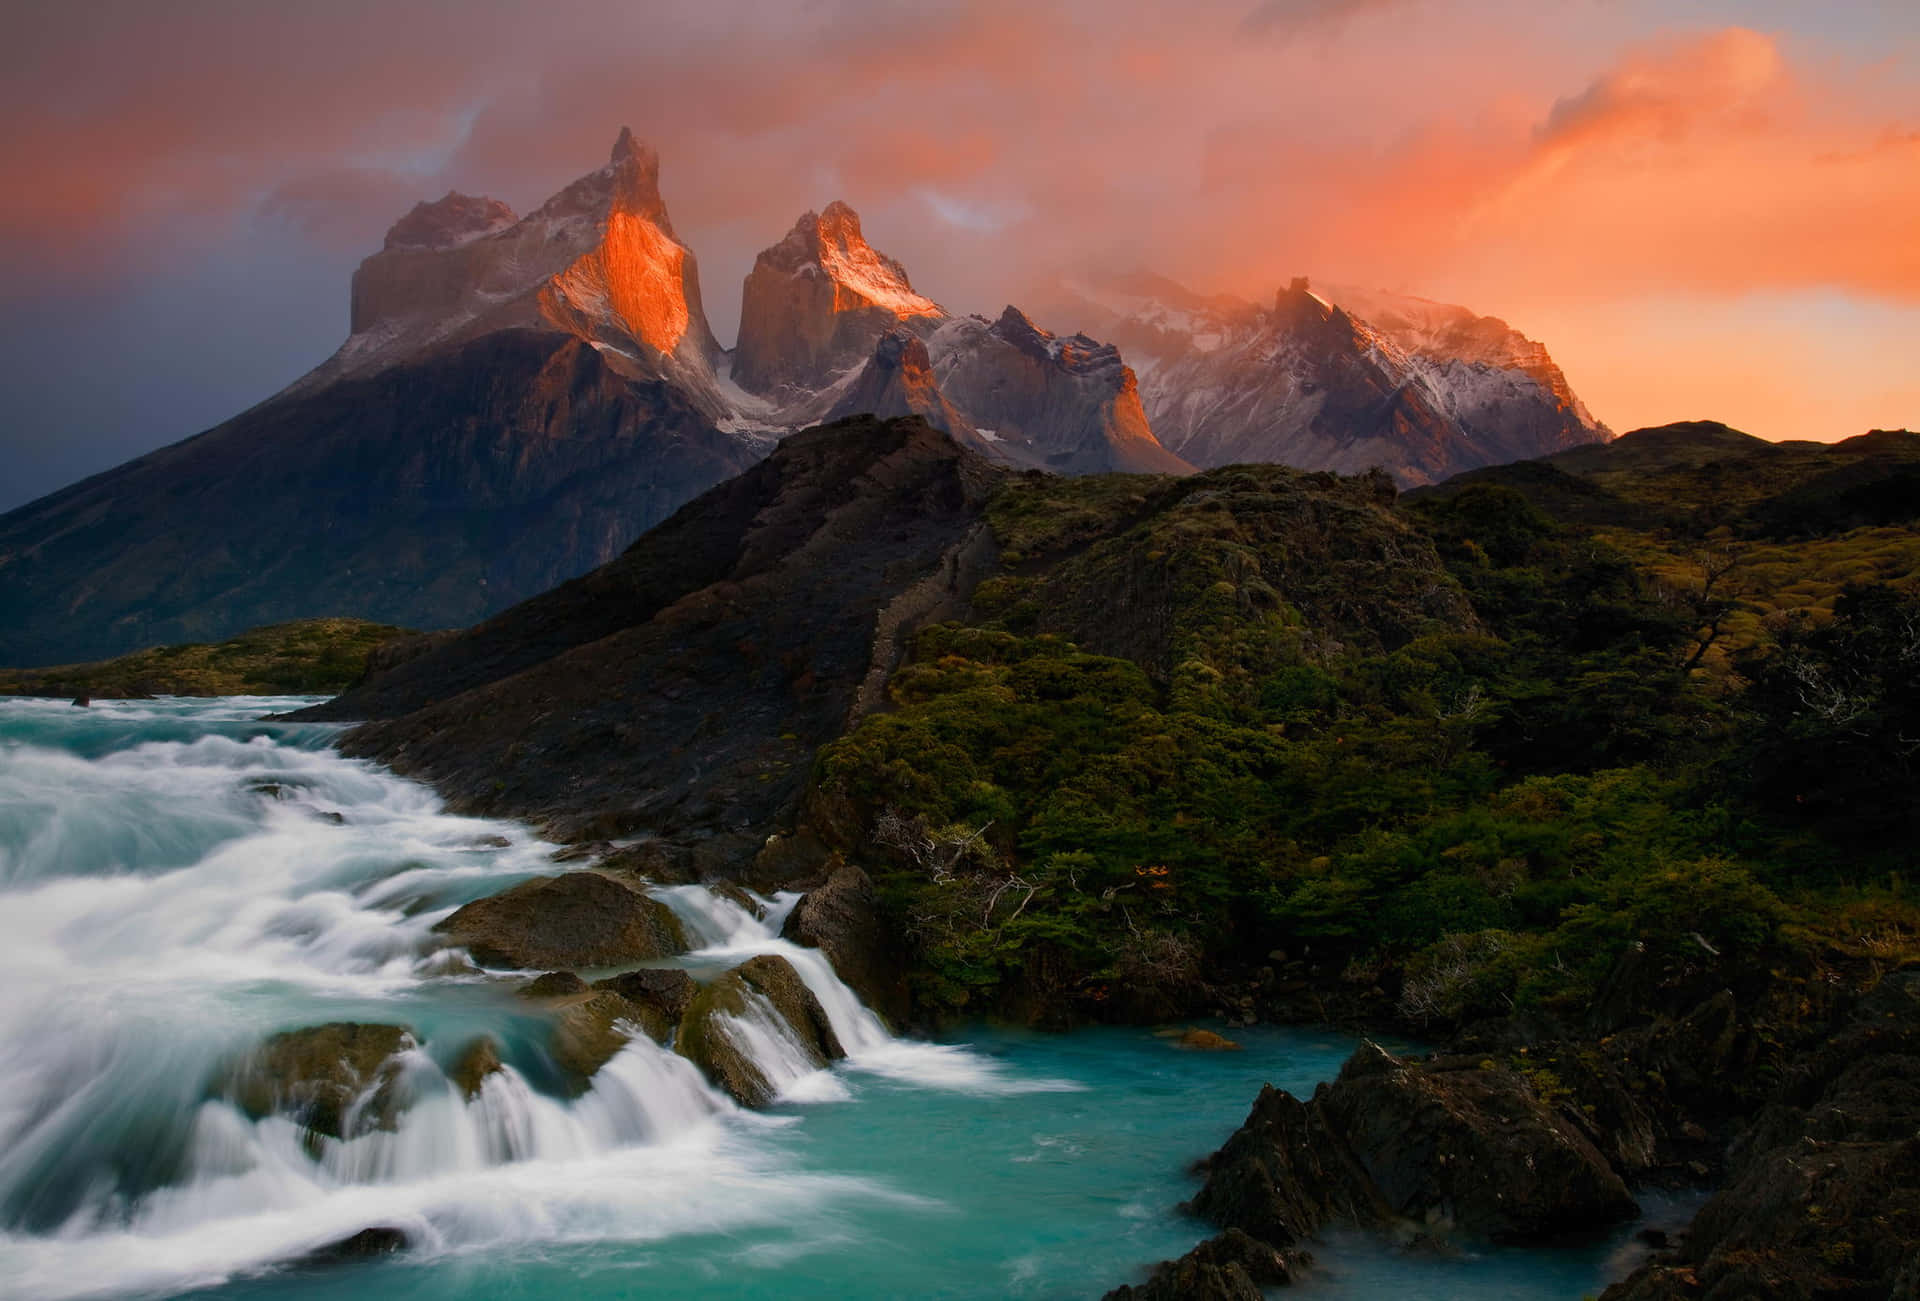 Explore the awe-inspiring sights of Patagonia